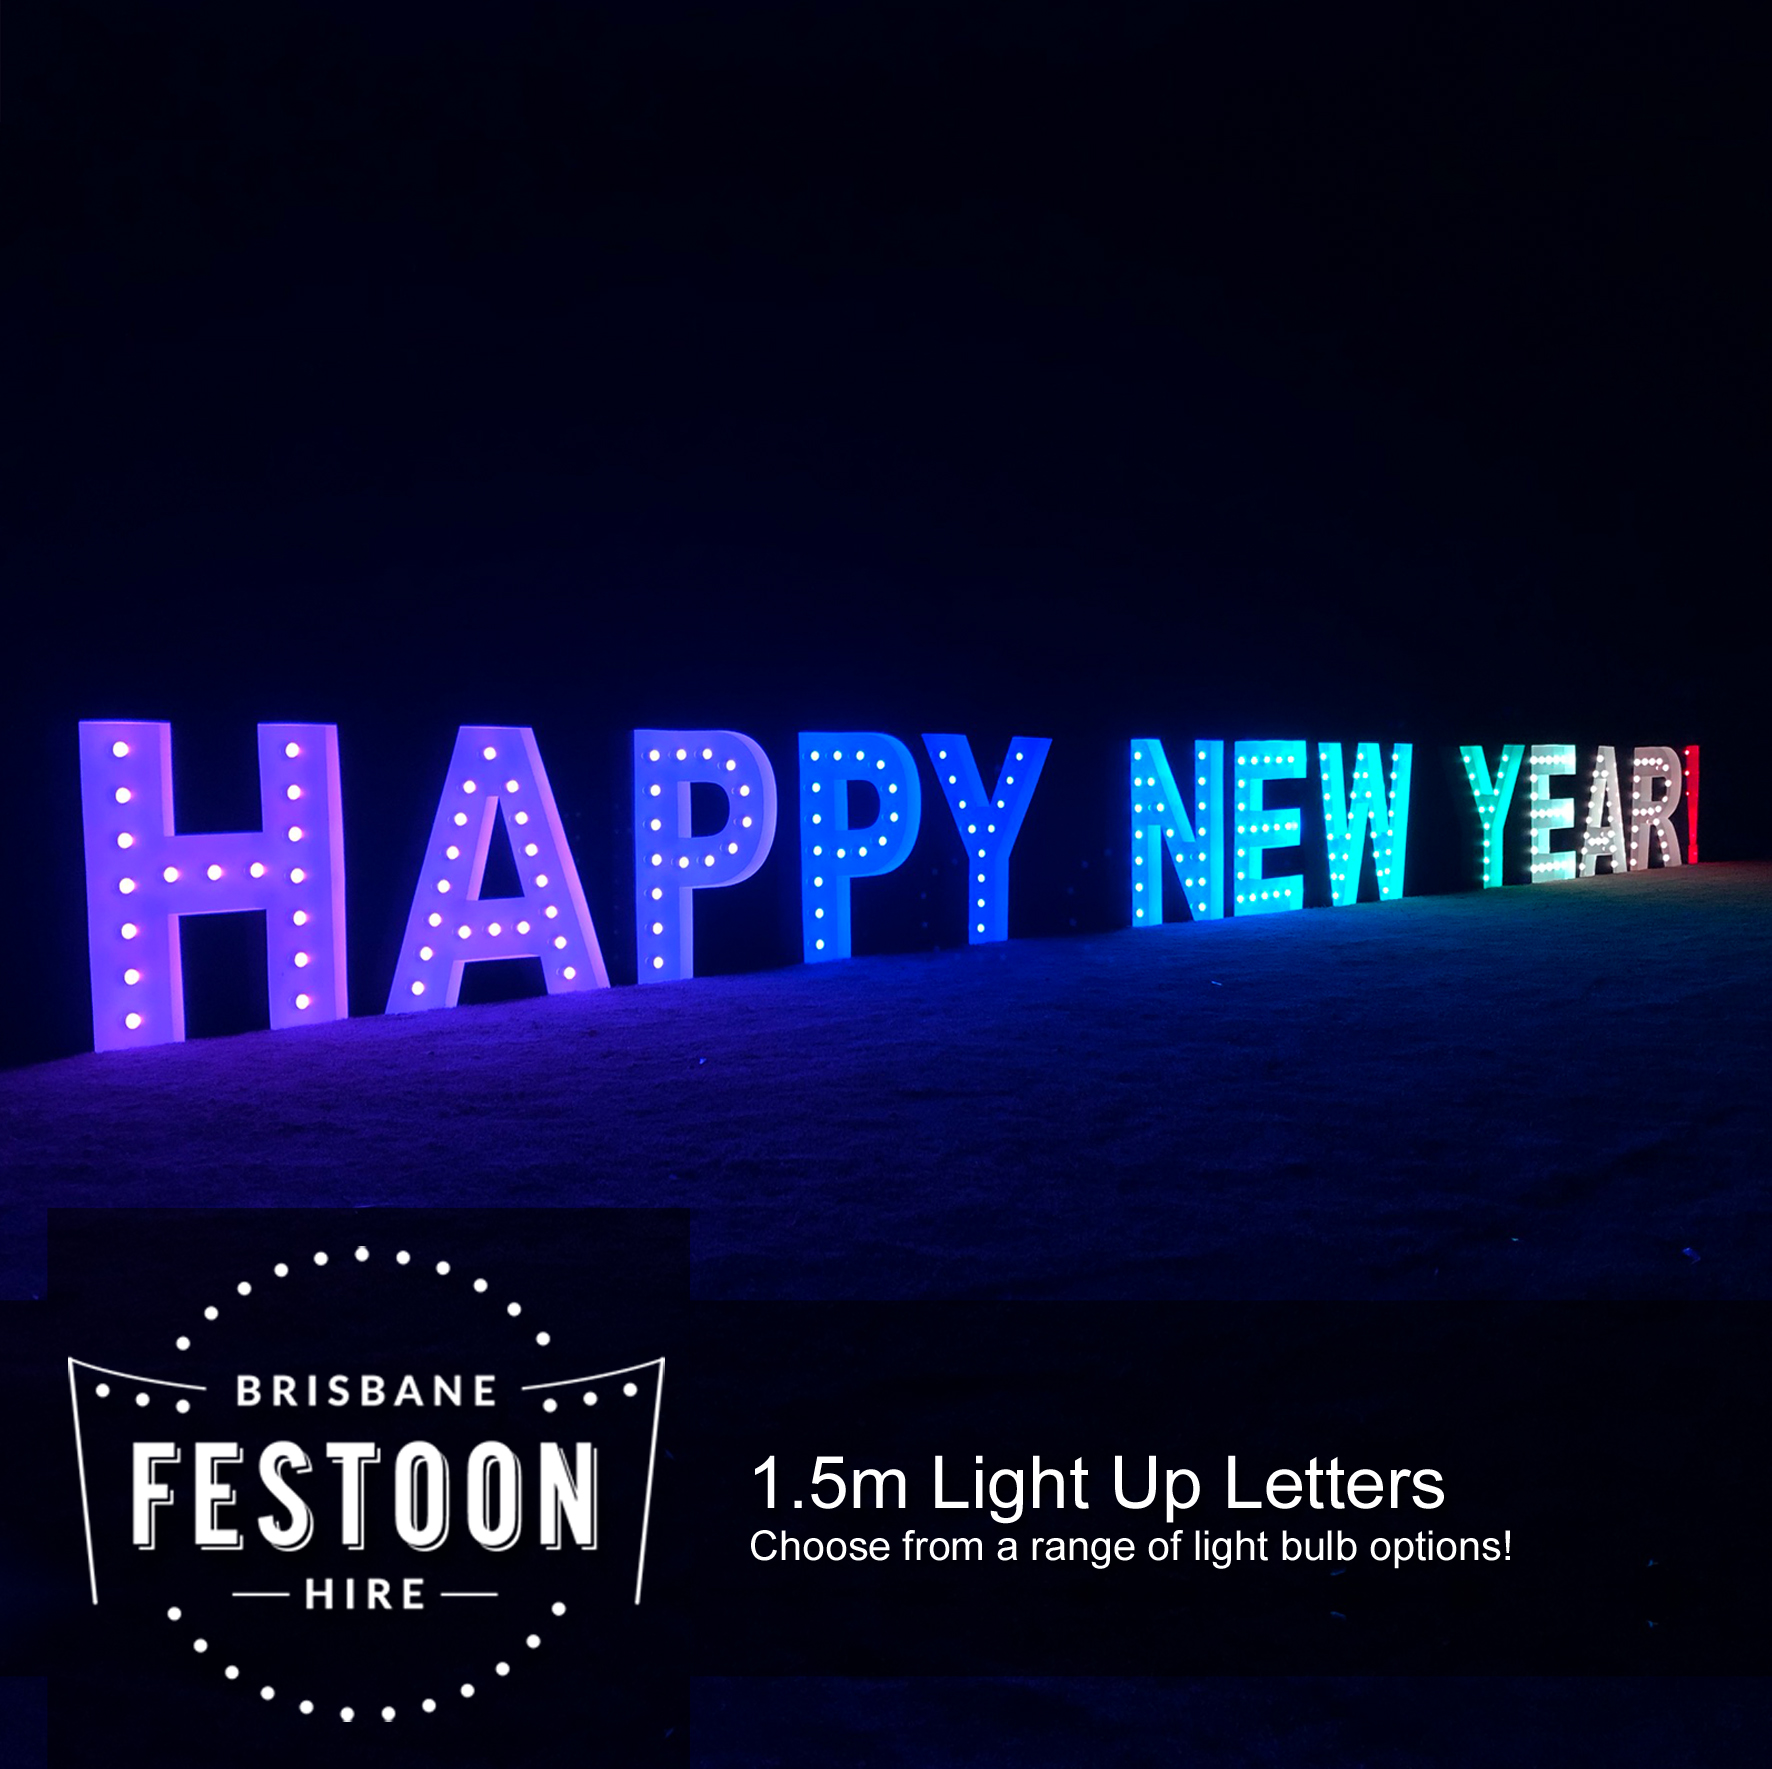 Brisbane Festoon Hire - Light Up Letter Hire.jpg